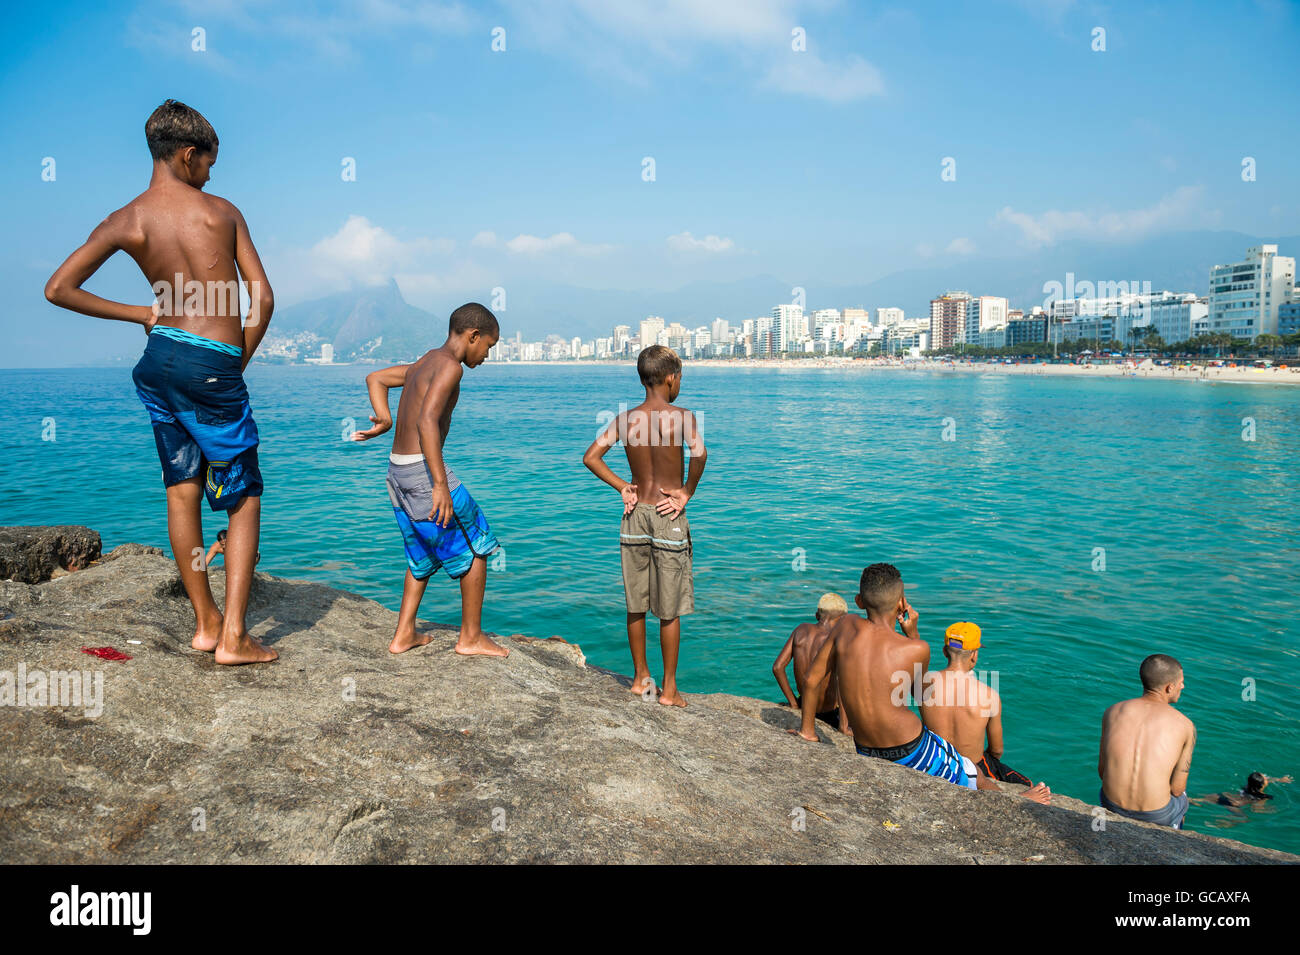 RIO DE JANEIRO - FEBRUARY 03, 2014: Group of young Brazilians gather to jump from the rocks at Arpoador near Ipanema Beach. Stock Photo